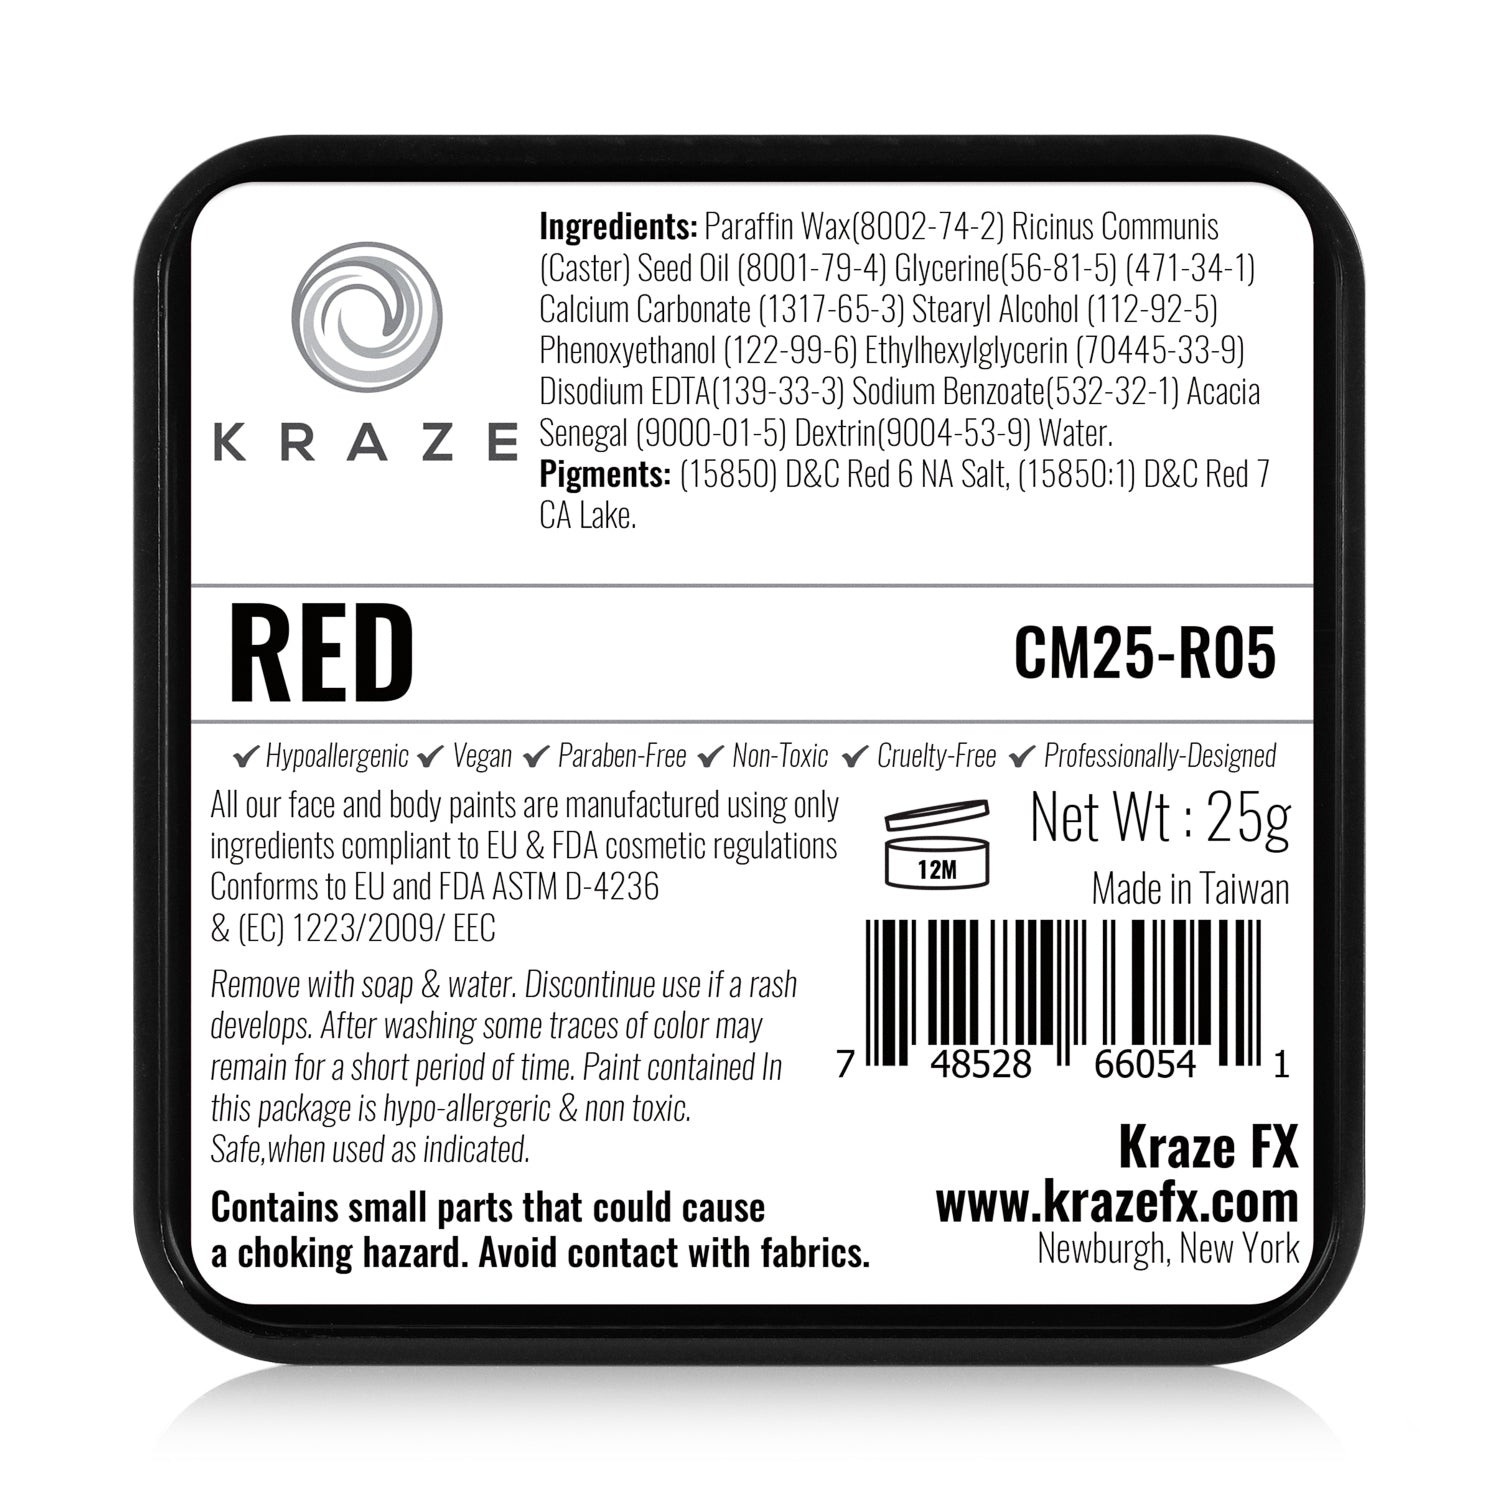 Kraze FX Face & Body Paint - Red (25 gm)